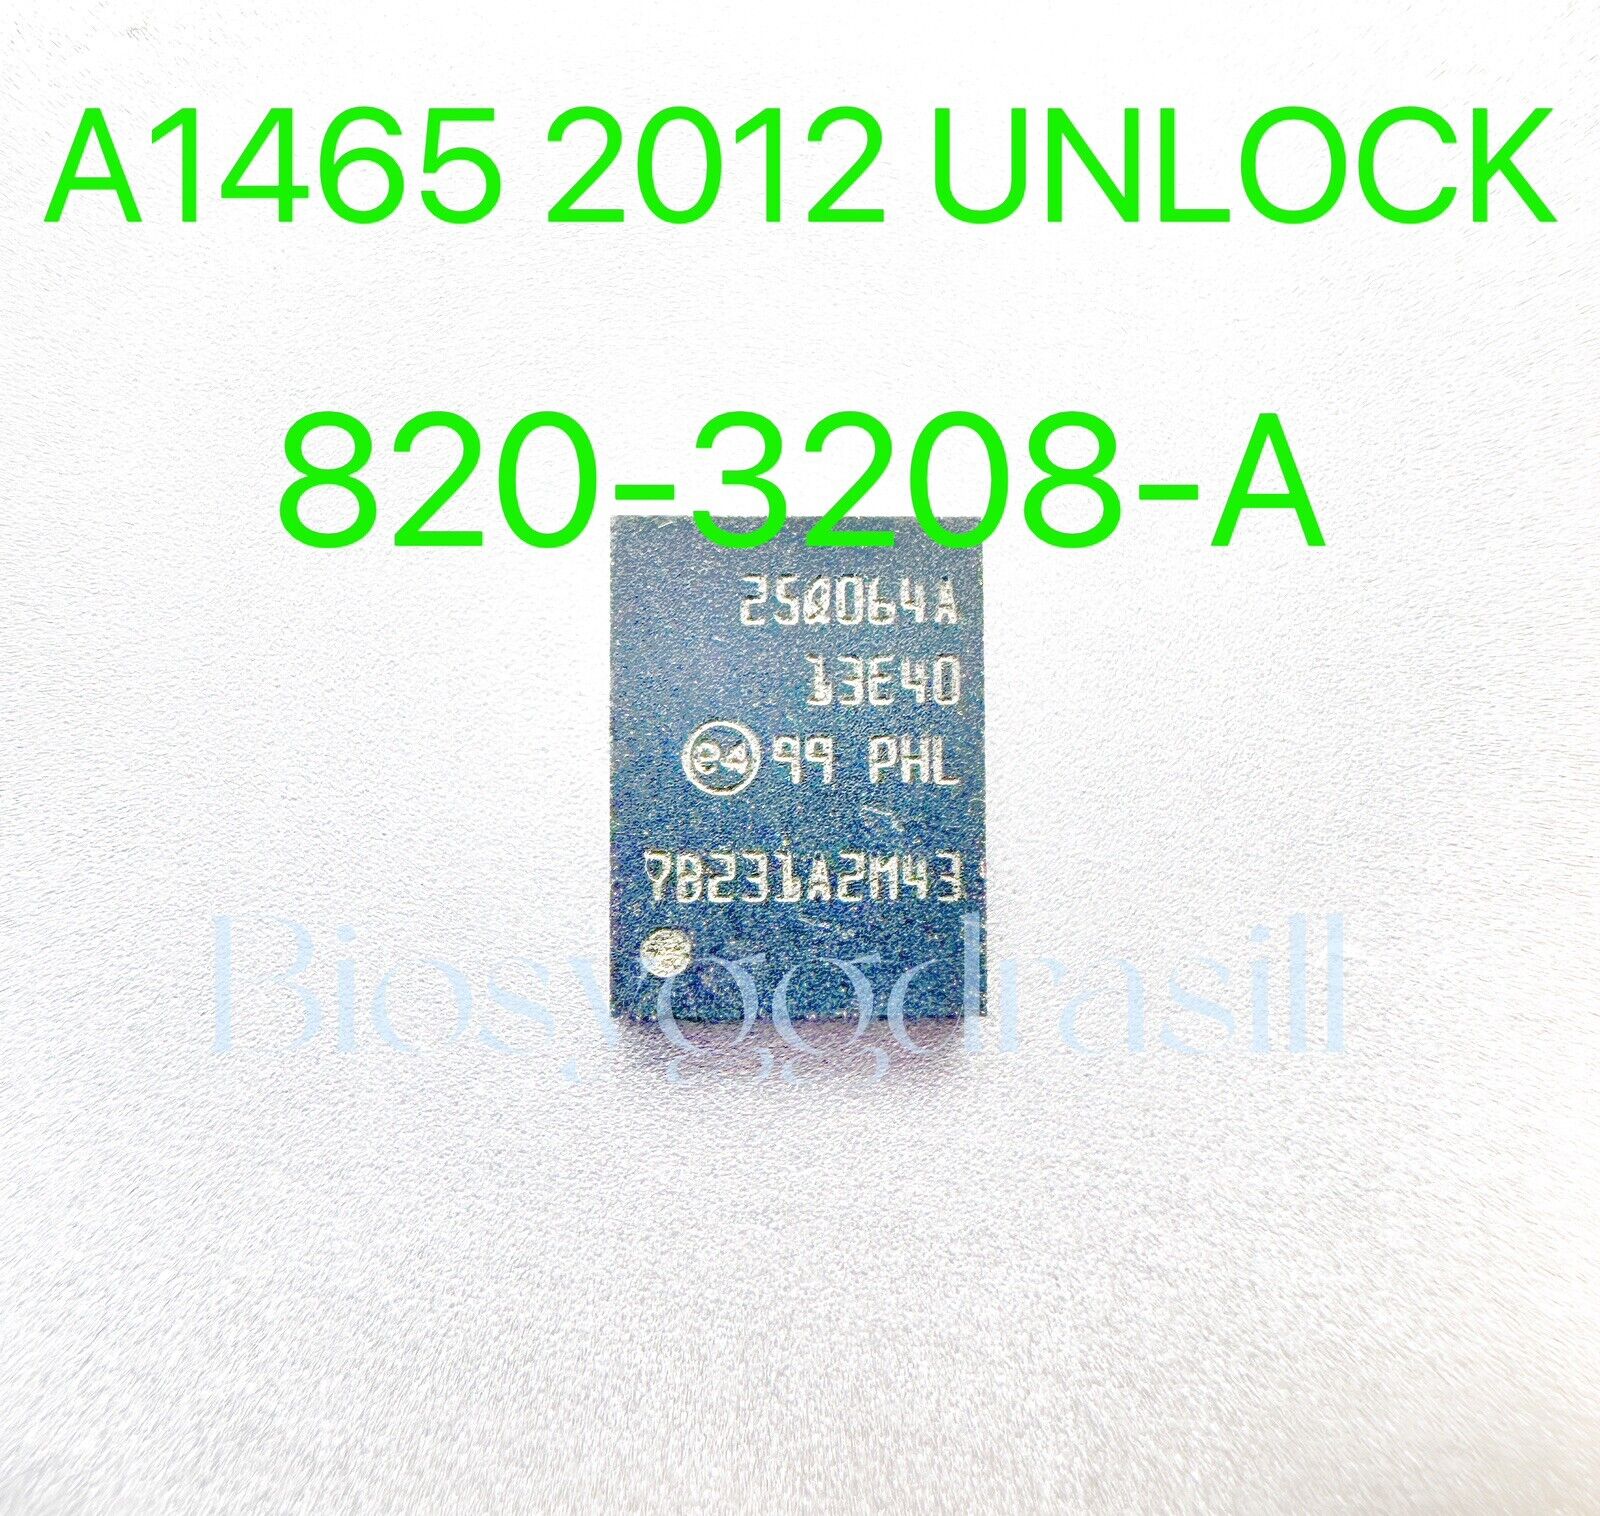 BIOS CHIP UNLOCK EMC 2558 820-3208-A APPLE A1465 2012 MID N25Q064AX3E(8M) 6x8mm